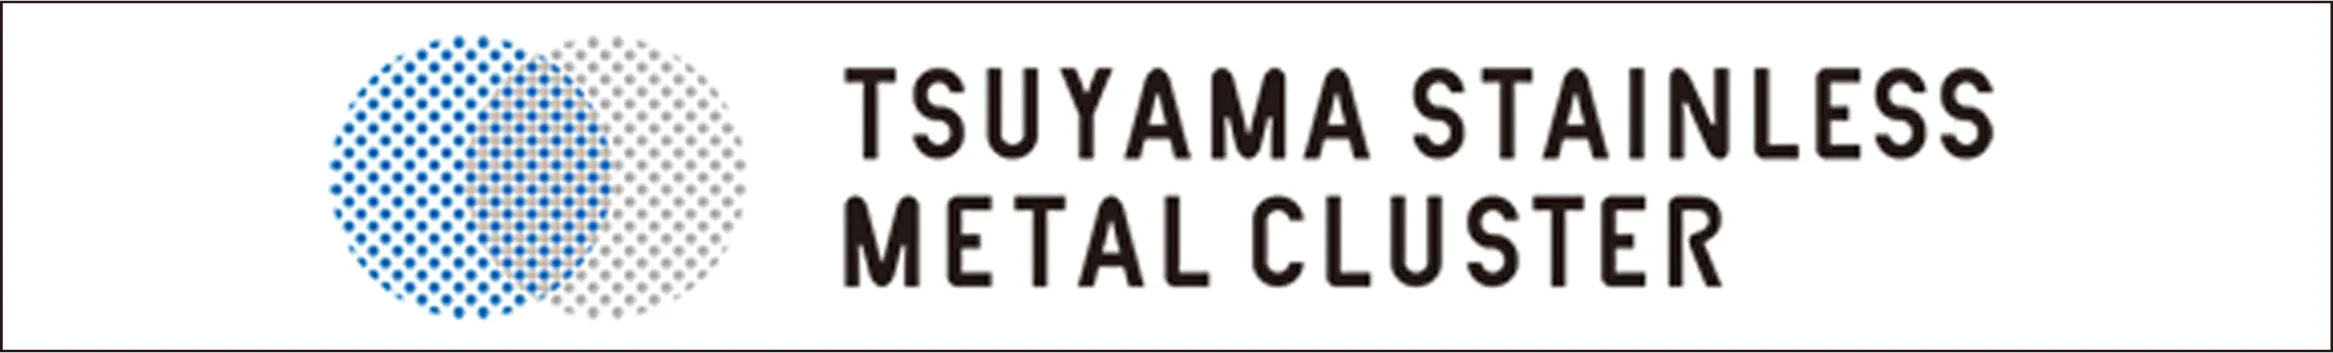 TSUYAMA STAINLESS METAL CLUSTER